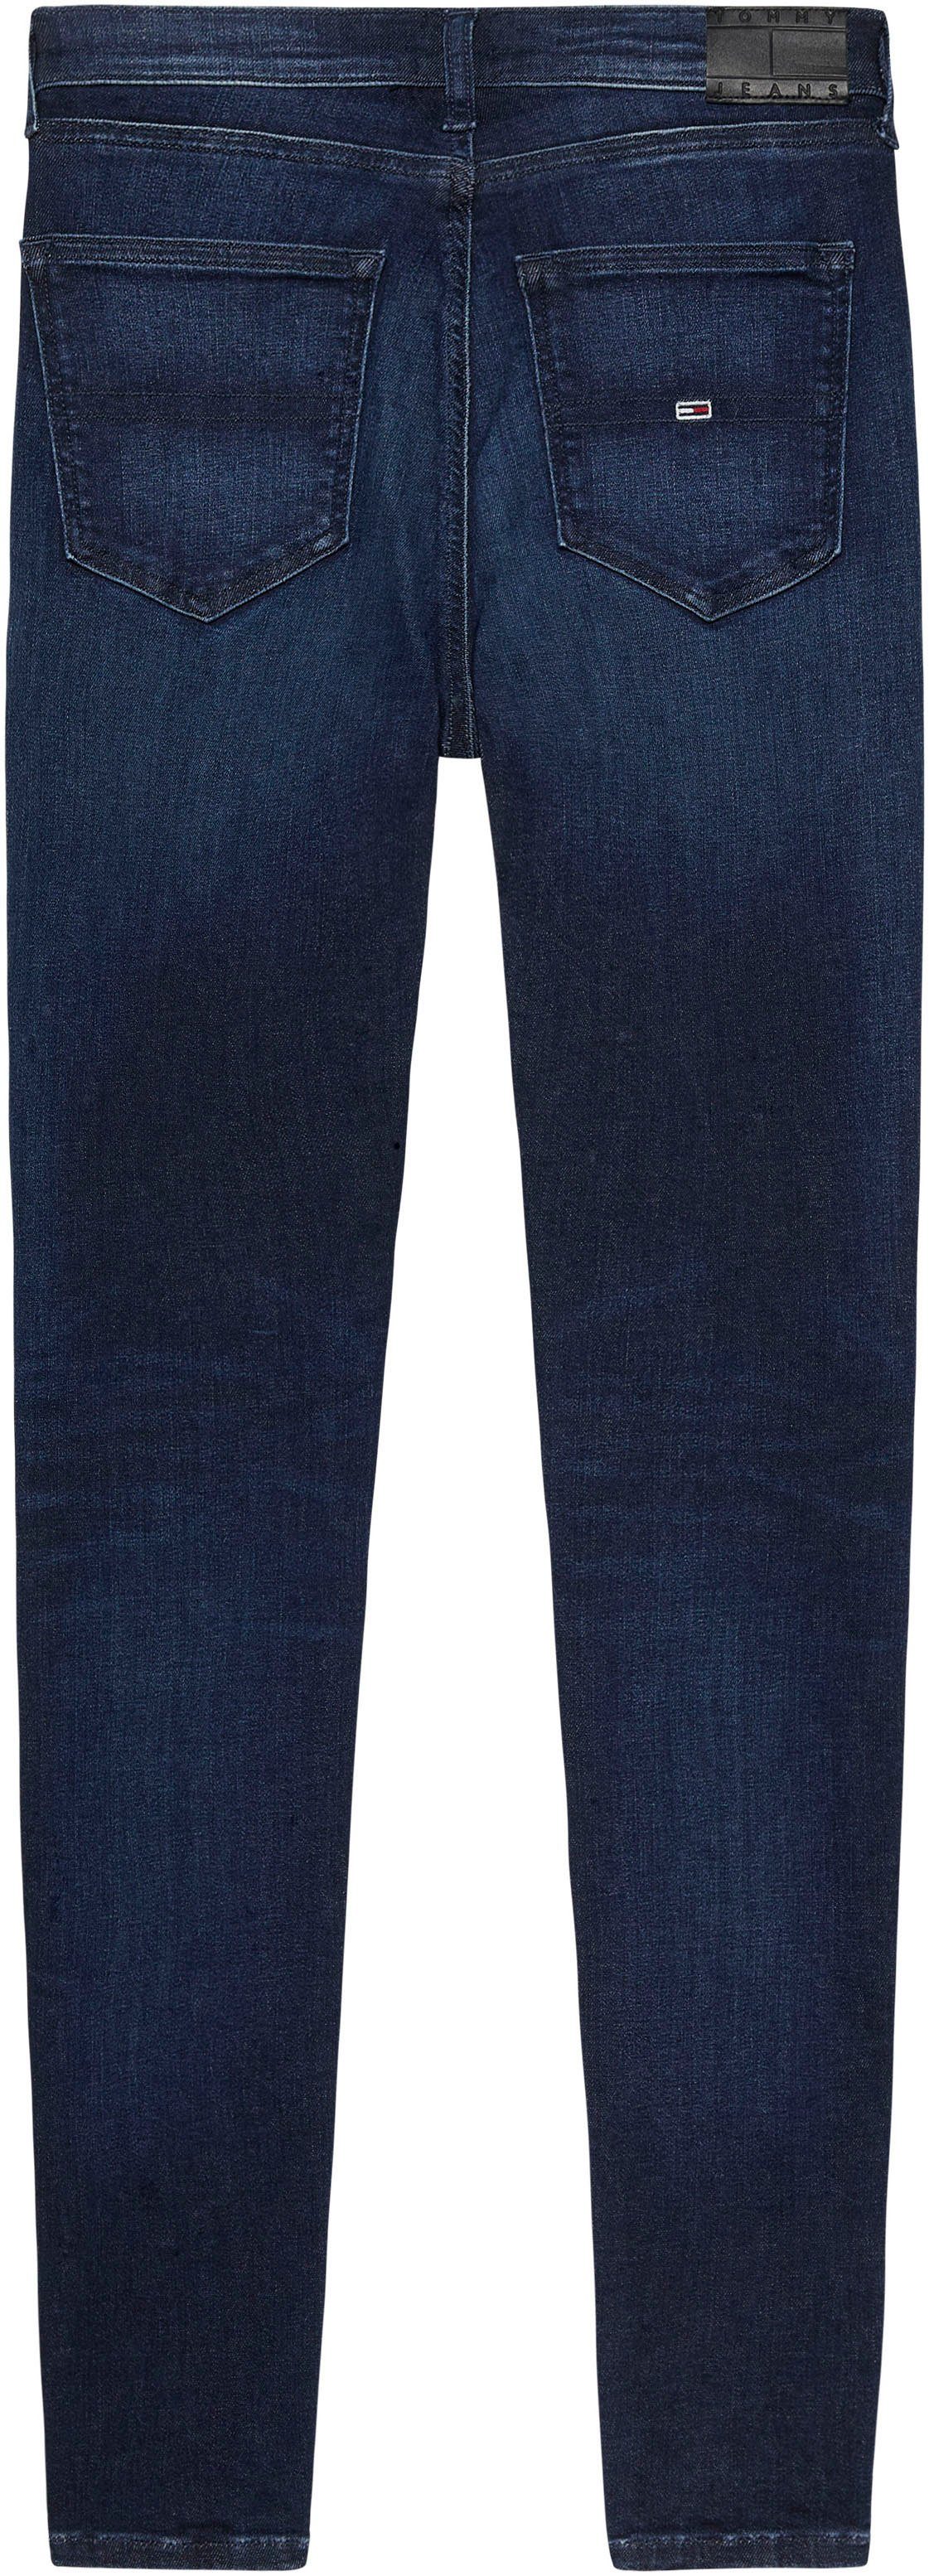 Ledermarkenlabel Dark1 Tommy Denim Bequeme Jeans Sylvia mit Jeans